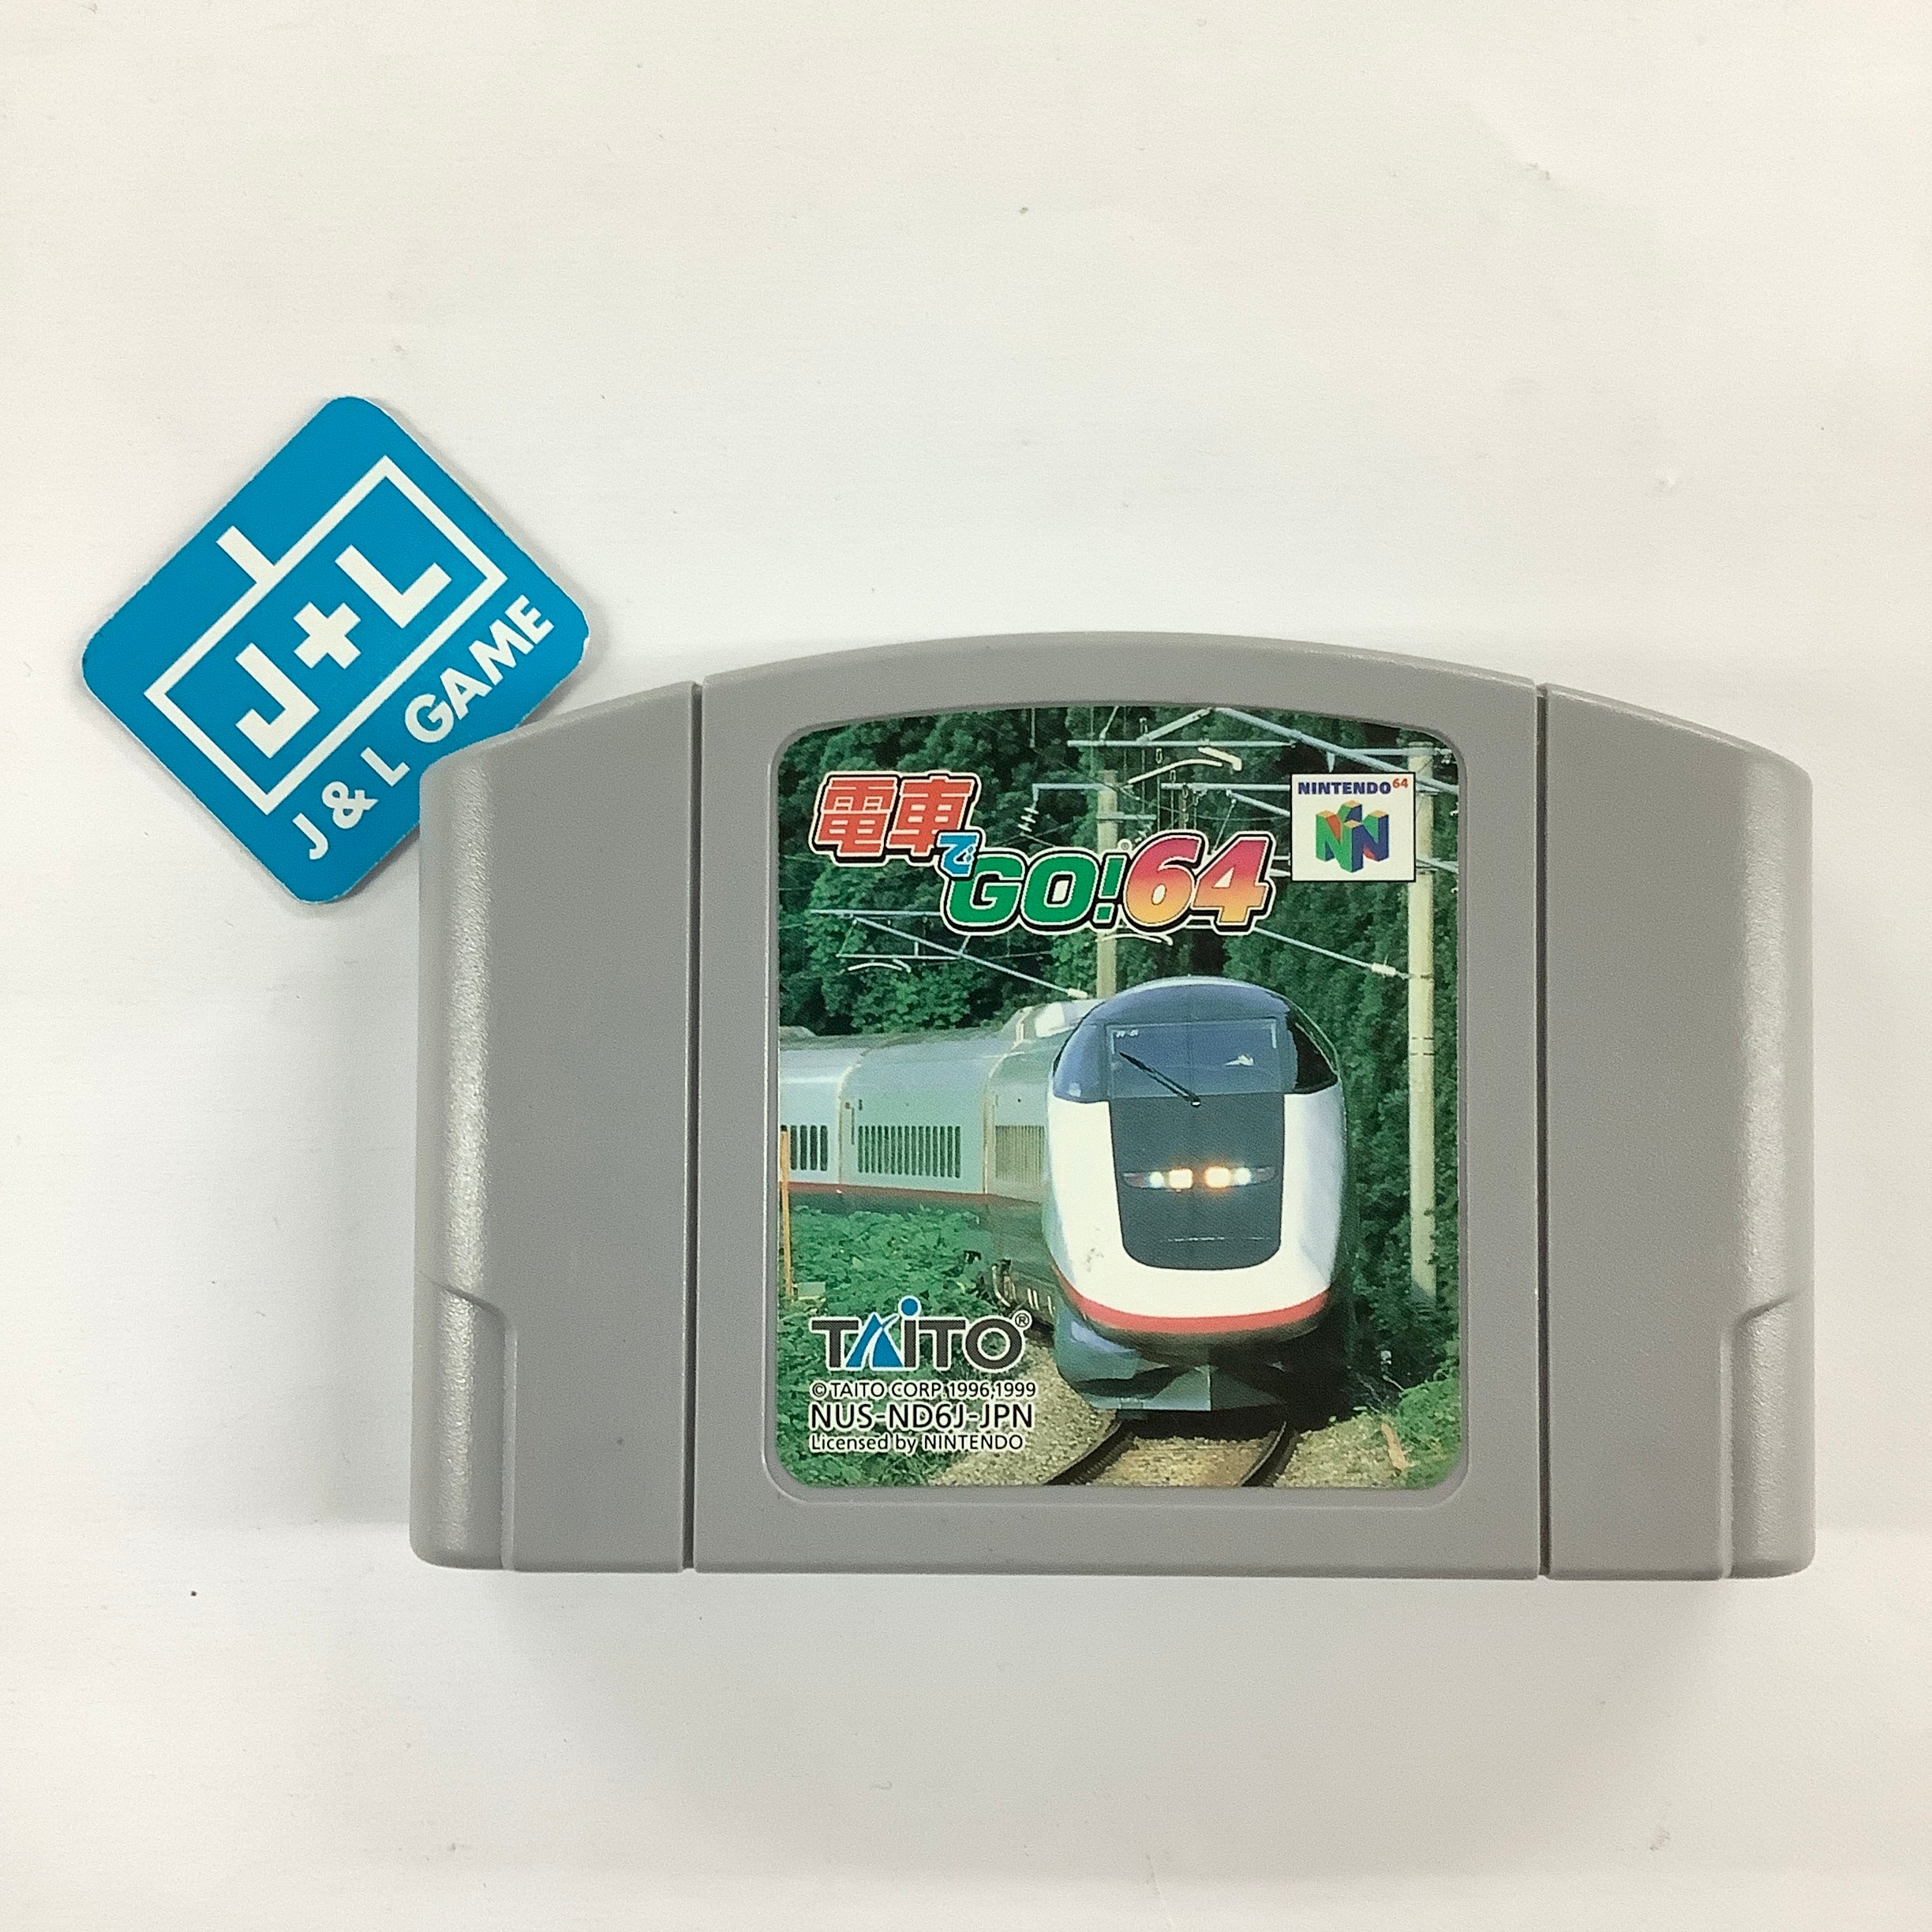 Densha de Go!64 - (N64) Nintendo 64 [Pre-Owned] (Japanese Import) Video Games J&L Video Games New York City   